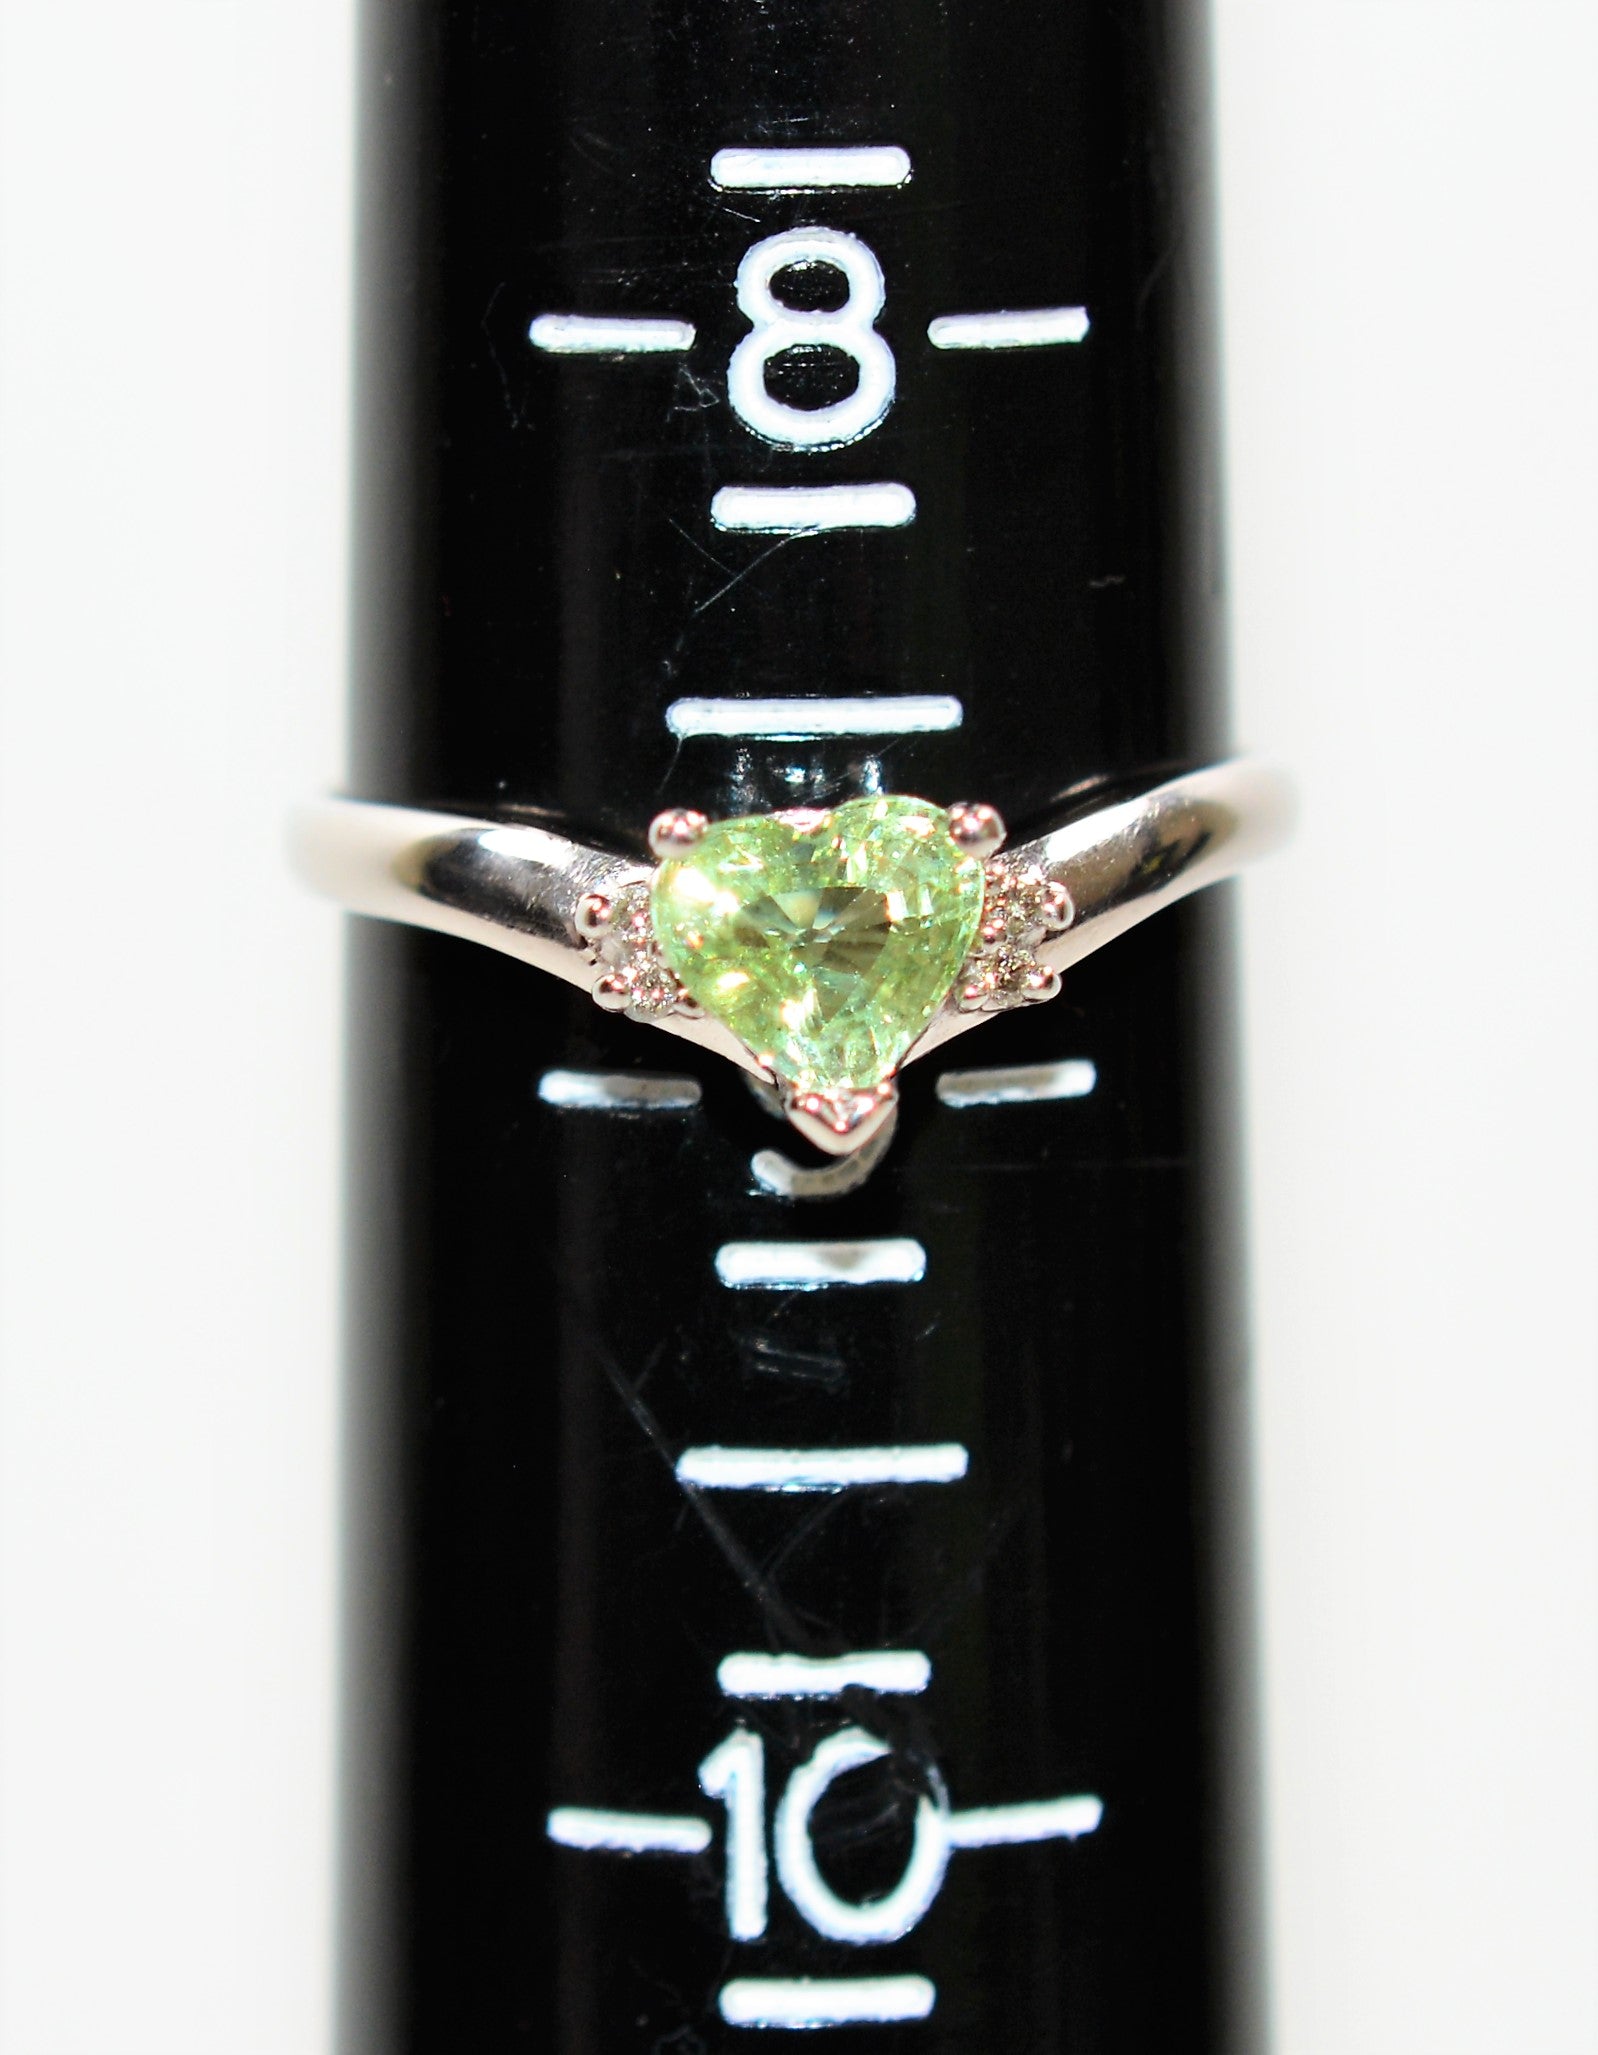 Natural Merelani Mint Garnet & Diamond Ring 14K Solid White Gold 1.14tcw Heart Ring Engagement Ring Wedding Ring Green Ring Bridal Jewelry